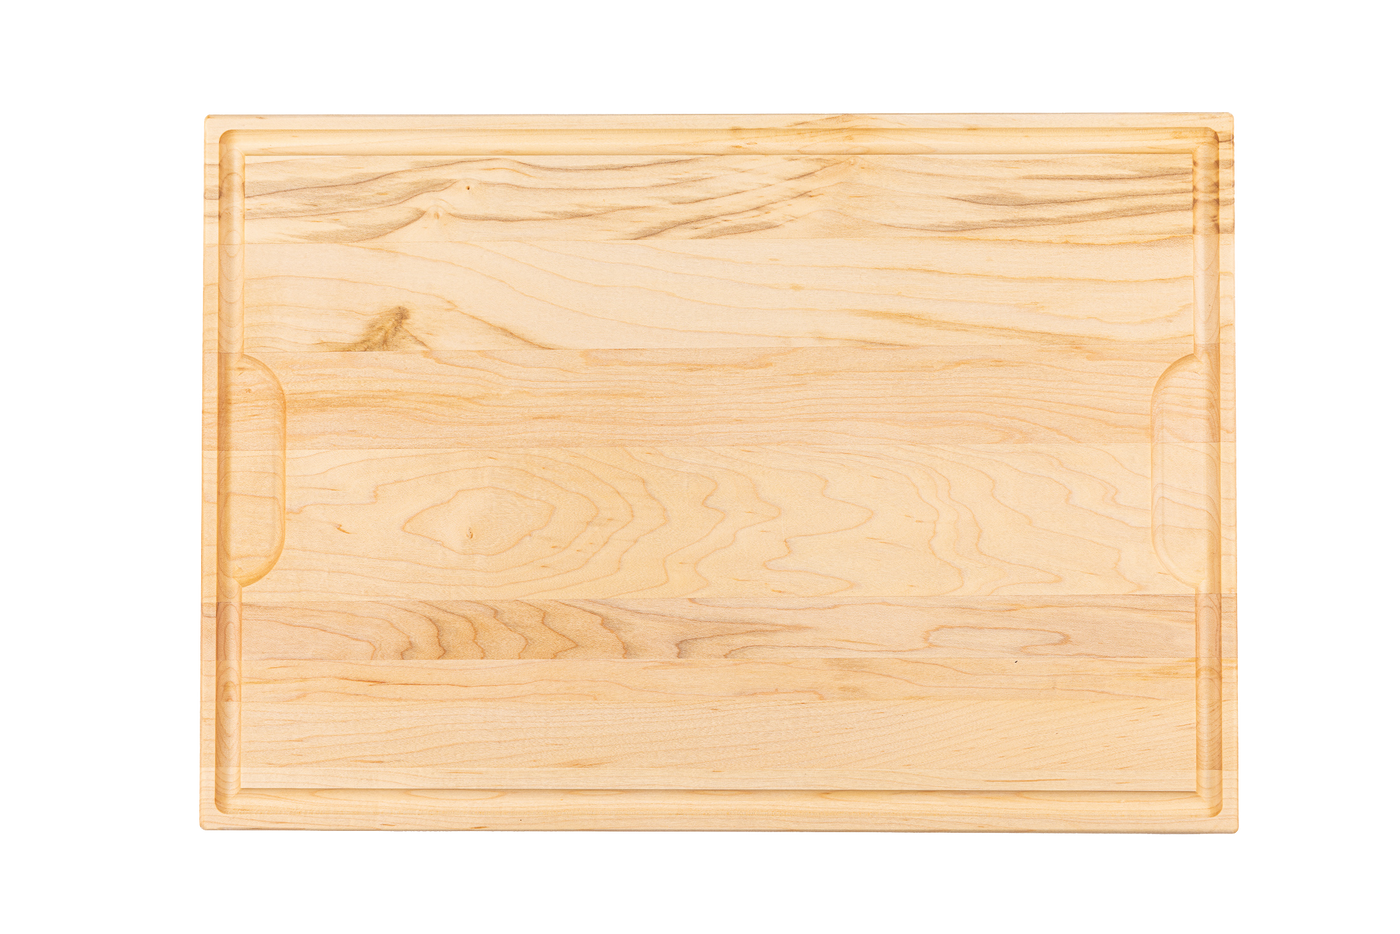 Maple - IHG18 - Cutting Board with Juice Groove - 18''x12''x3/4''